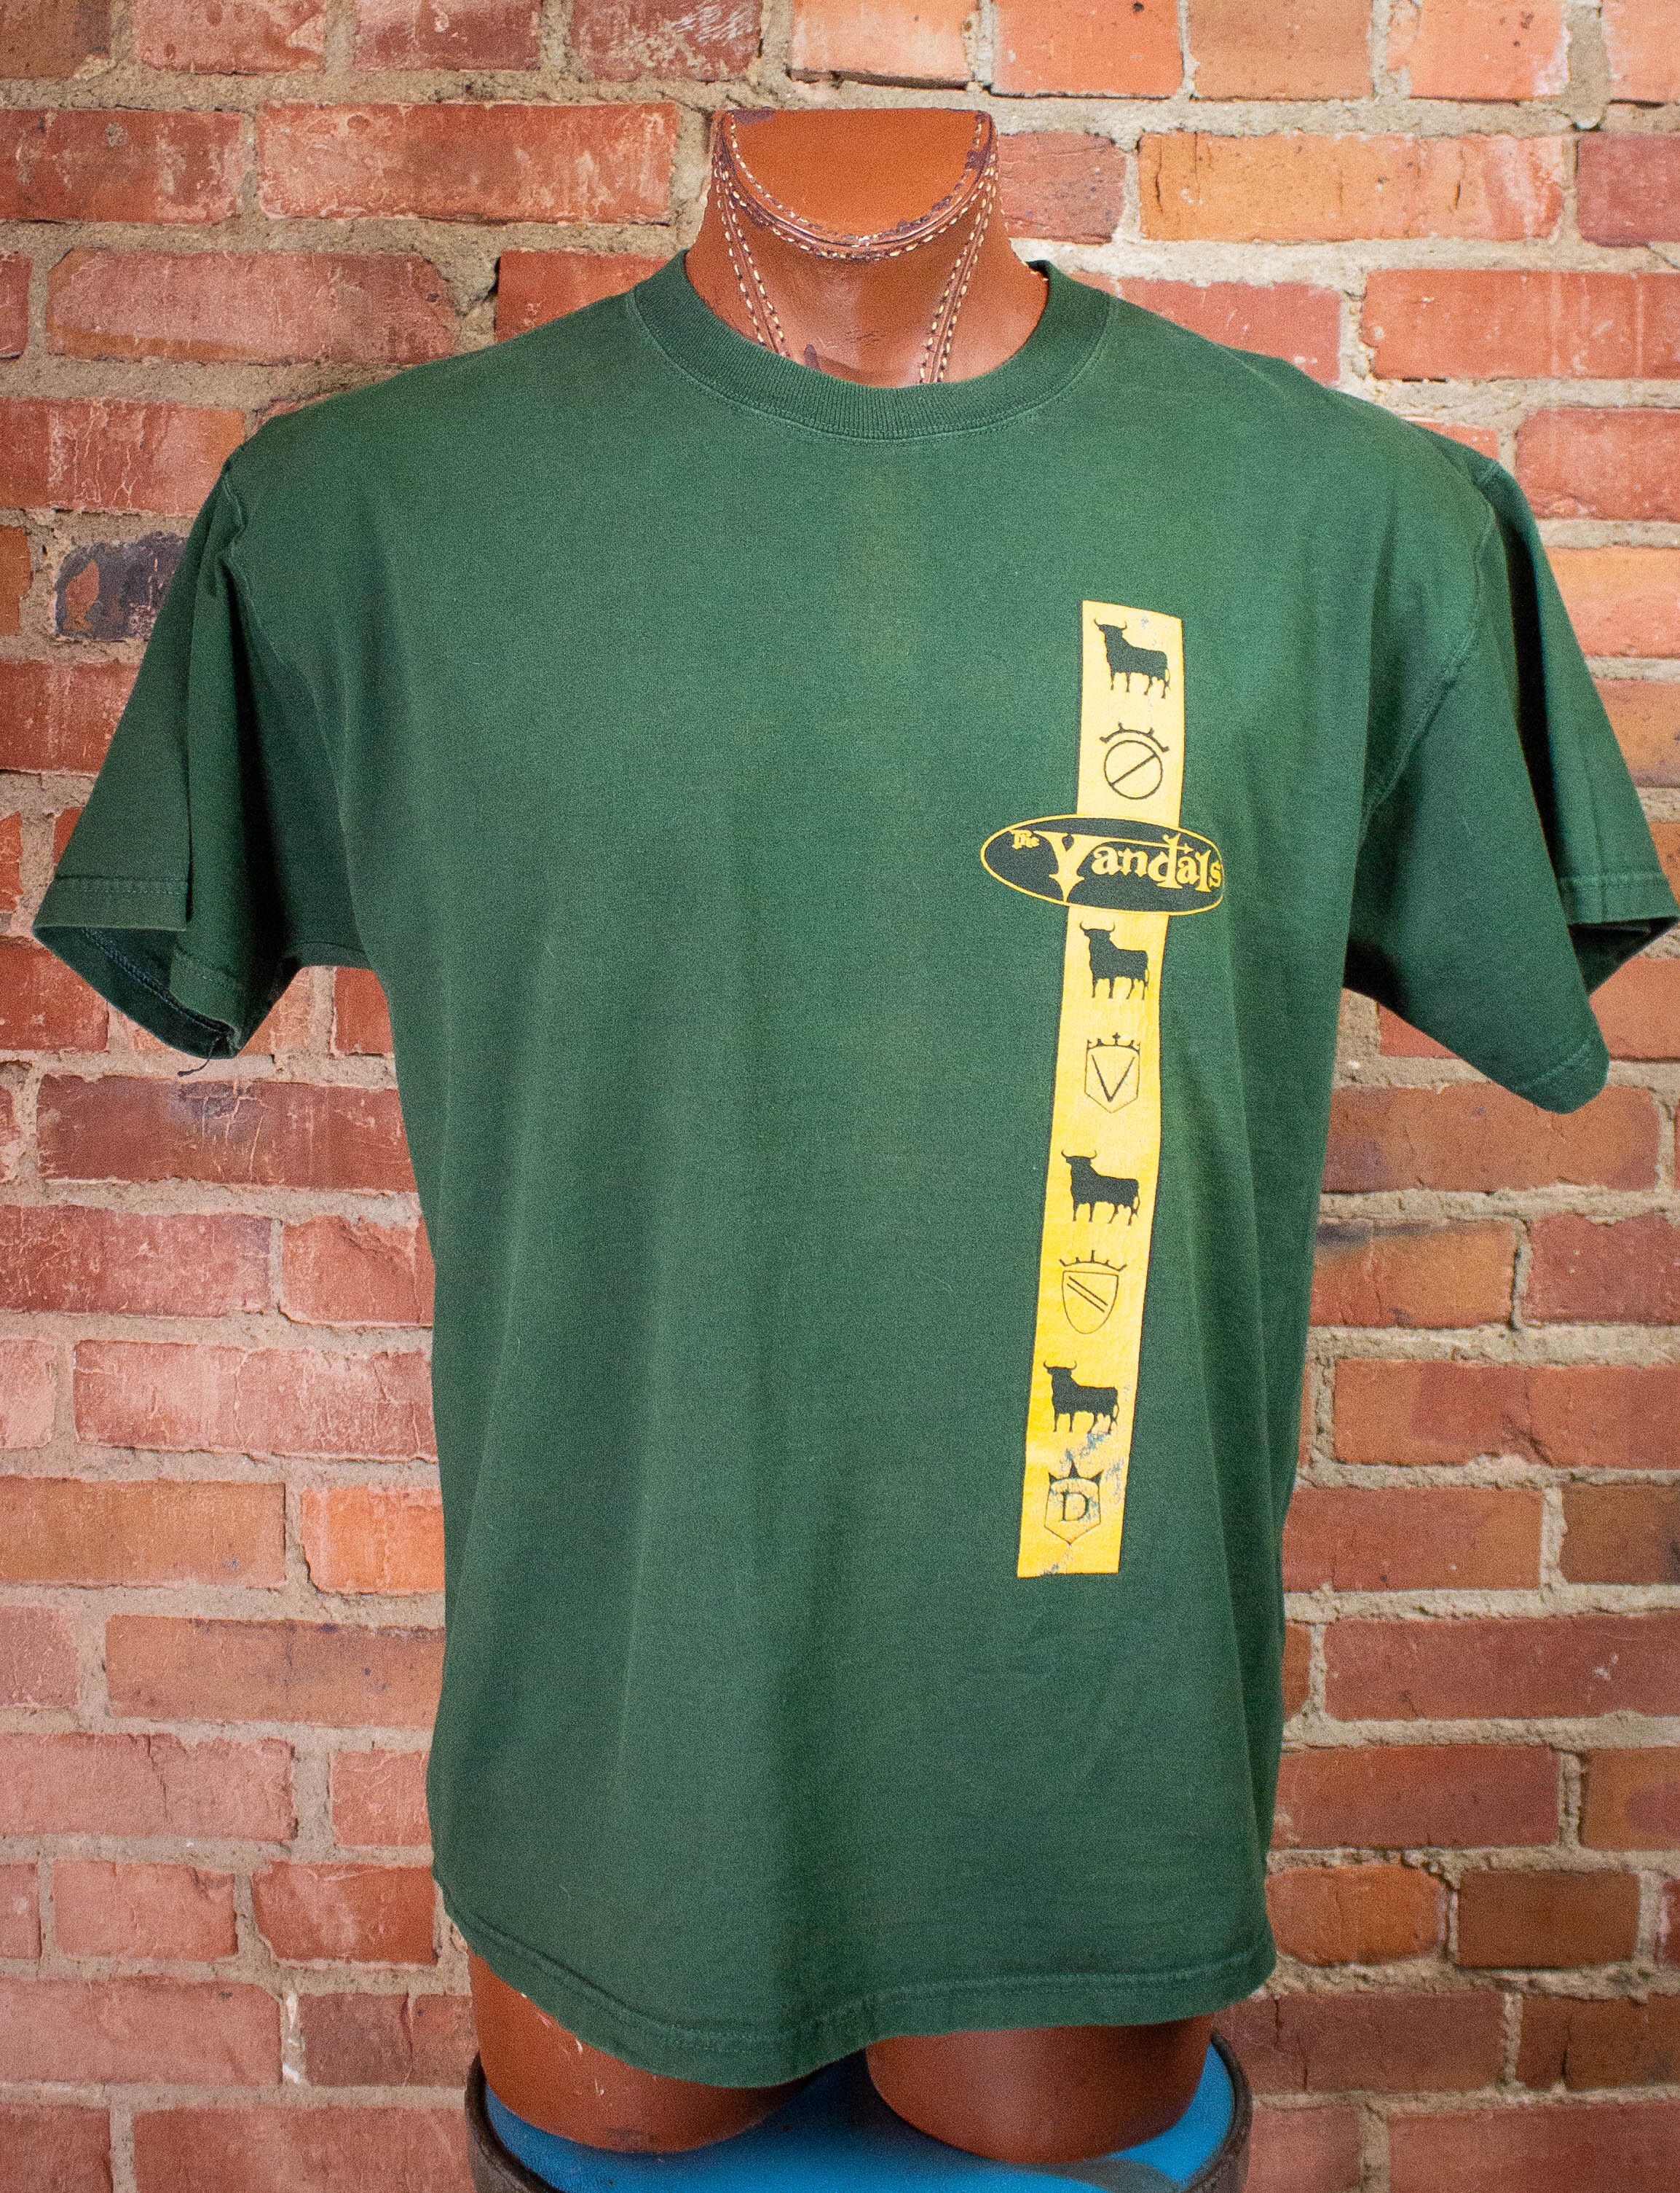 Vintage Vintage The Vandals Vertical Bull T-Shirt 2000s Green XXL Size US XXL / EU 58 / 5 - 1 Preview